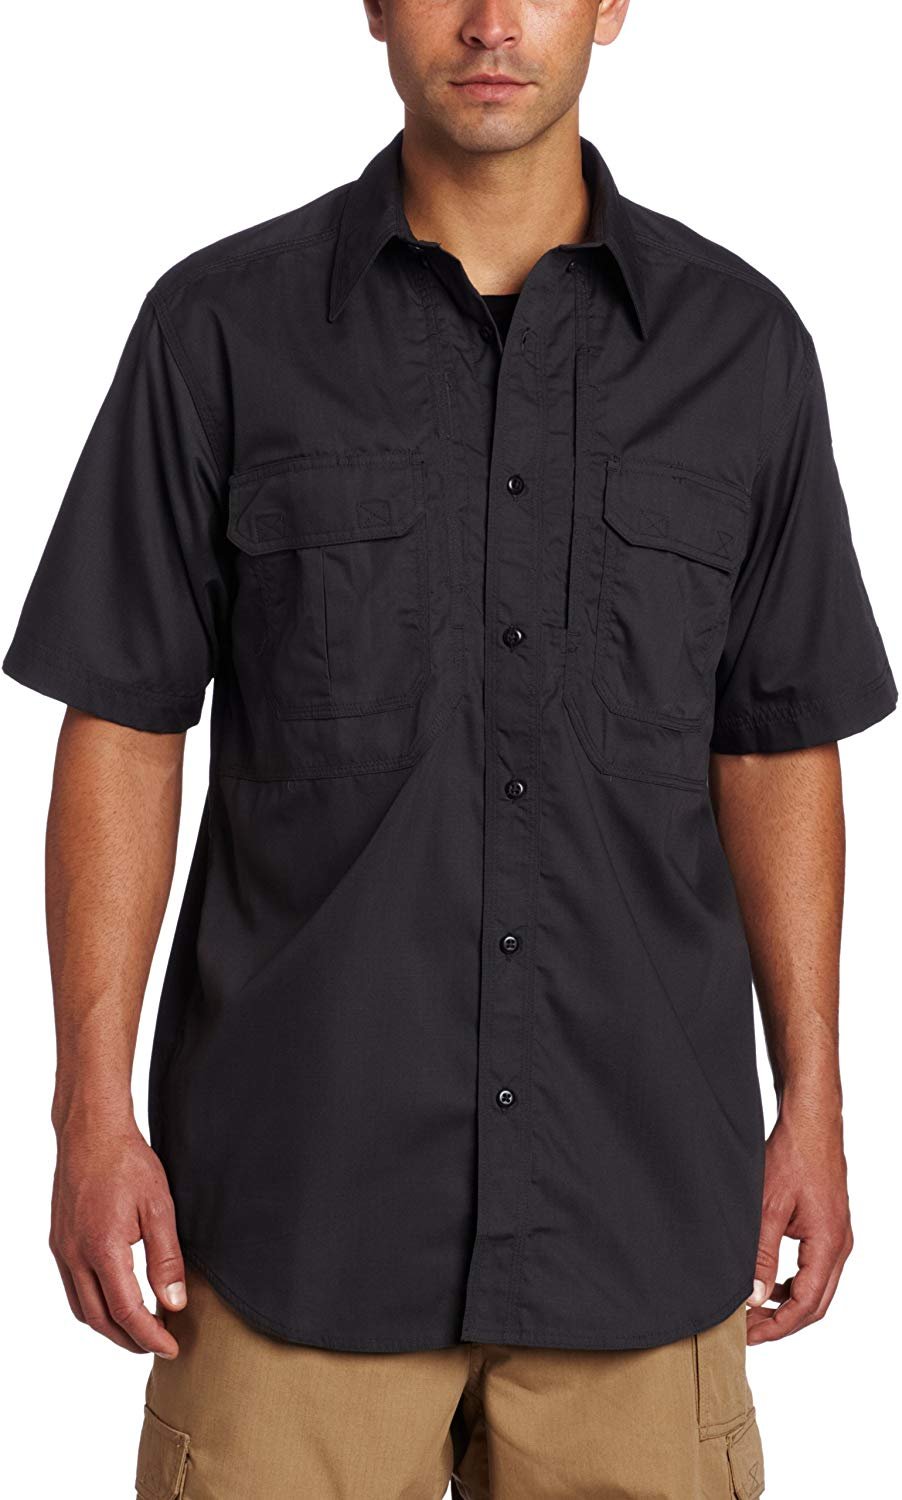 Style 71175 5.11 Tactical Men's Taclite Pro Short-Sleeve Button-Up Shirt 